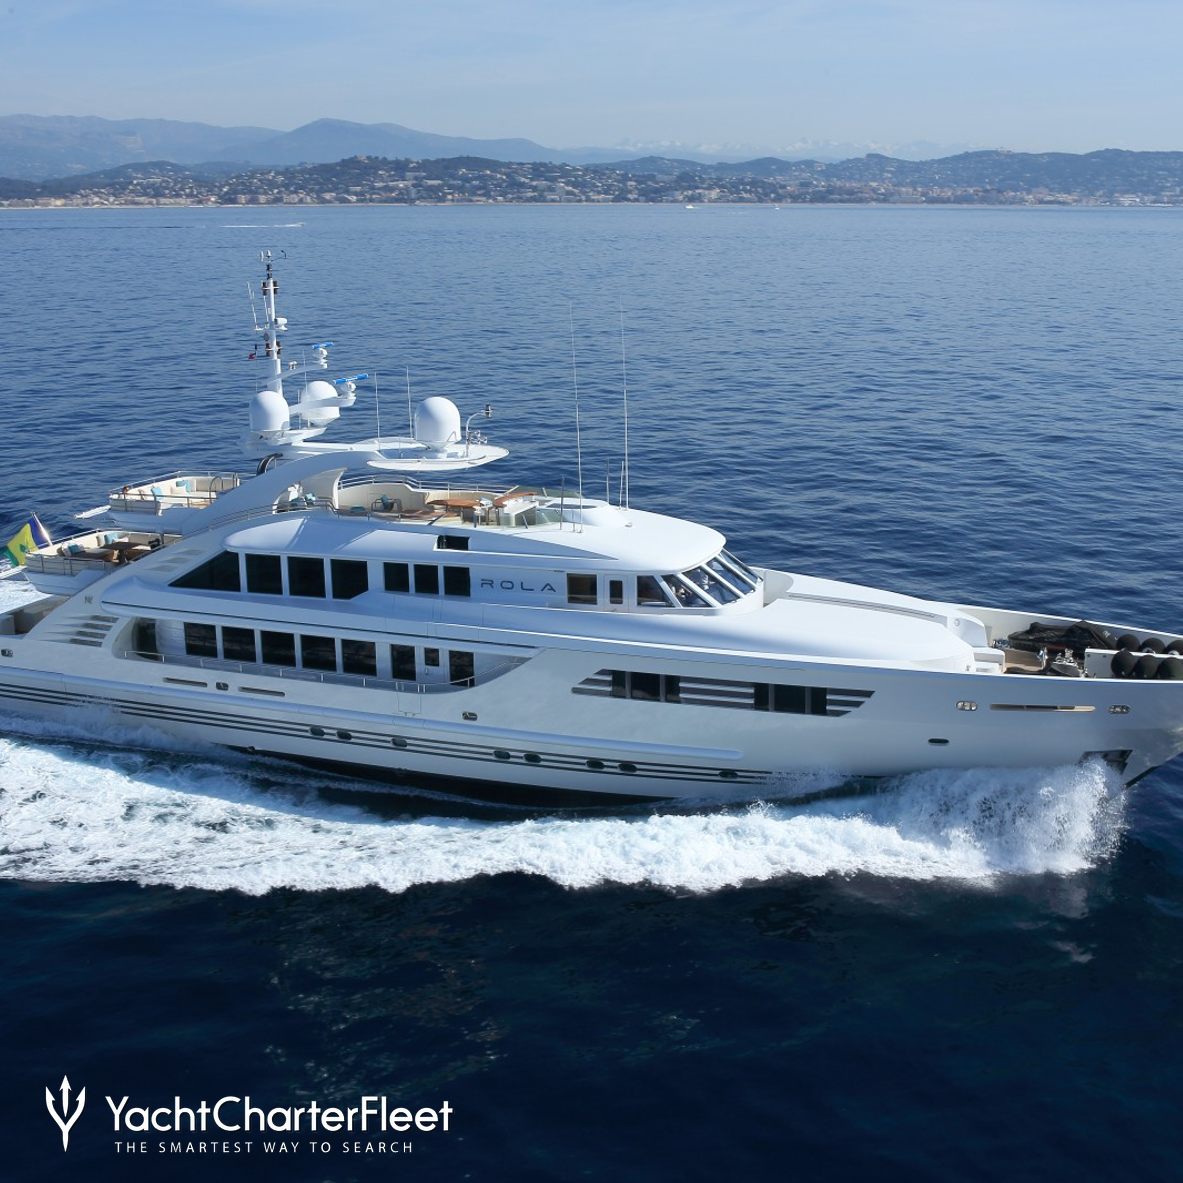 rola yacht charter